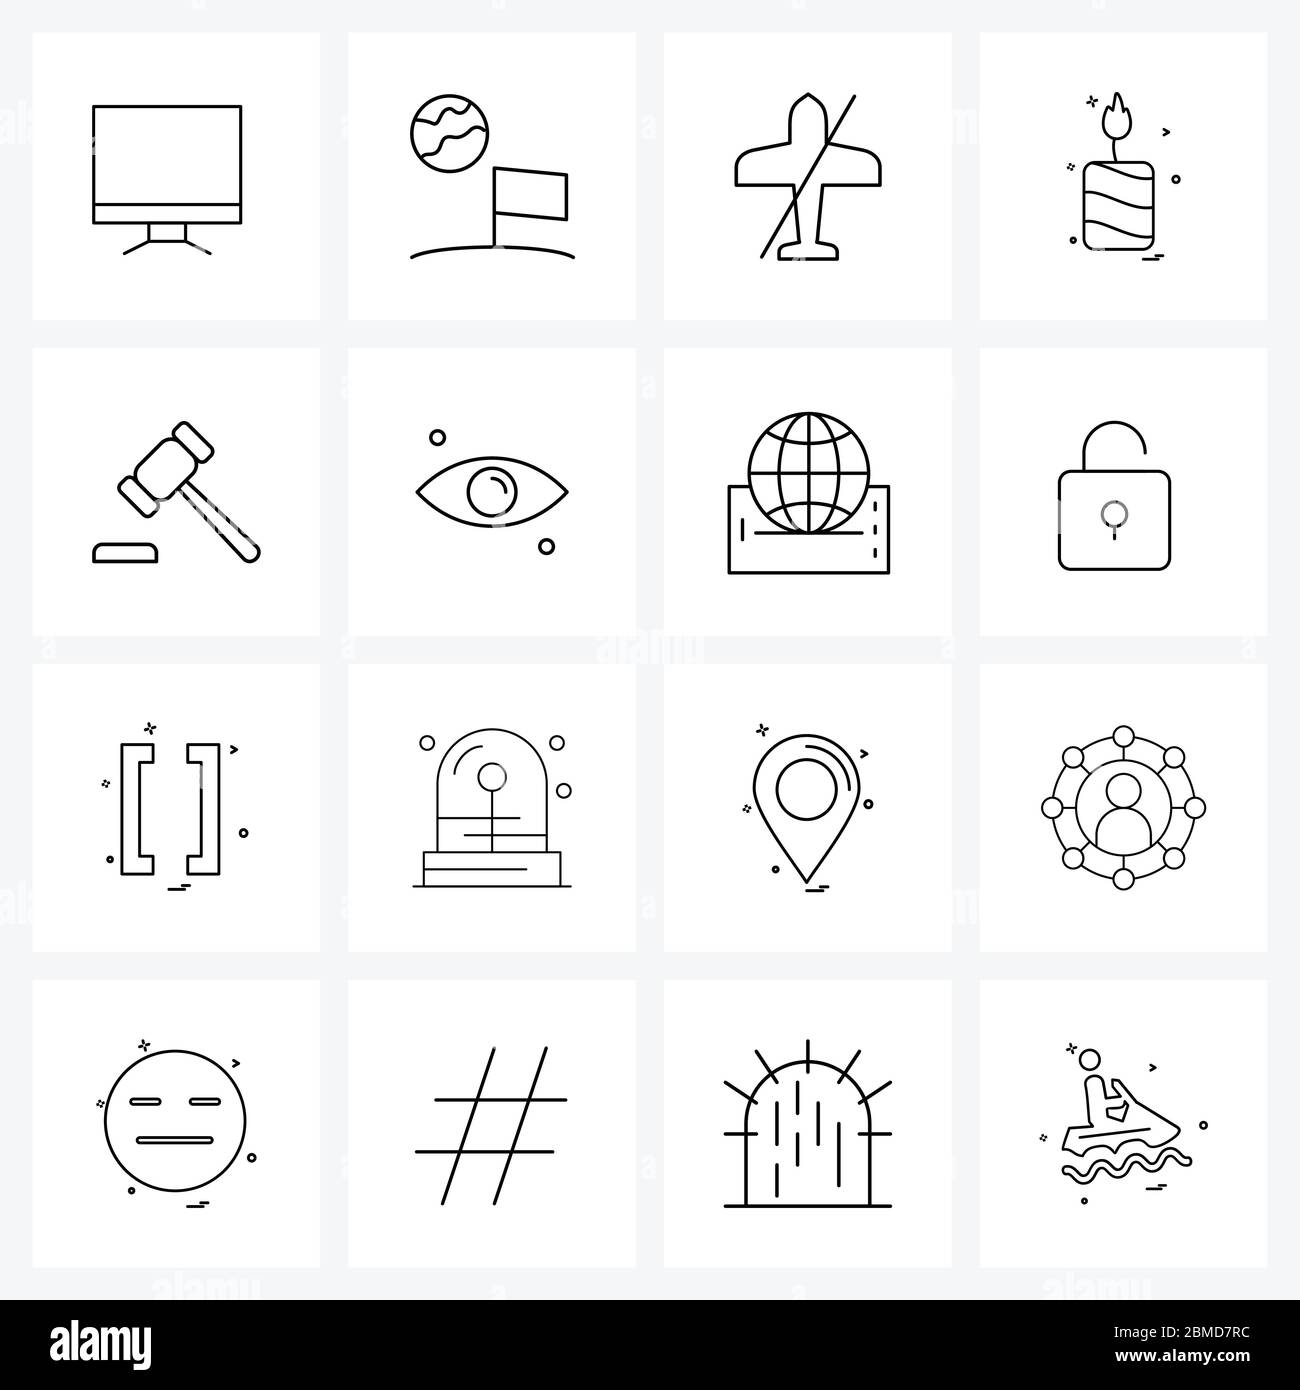 16 Editable Vector Line Icons and Modern Symbols of eyeball, court ...